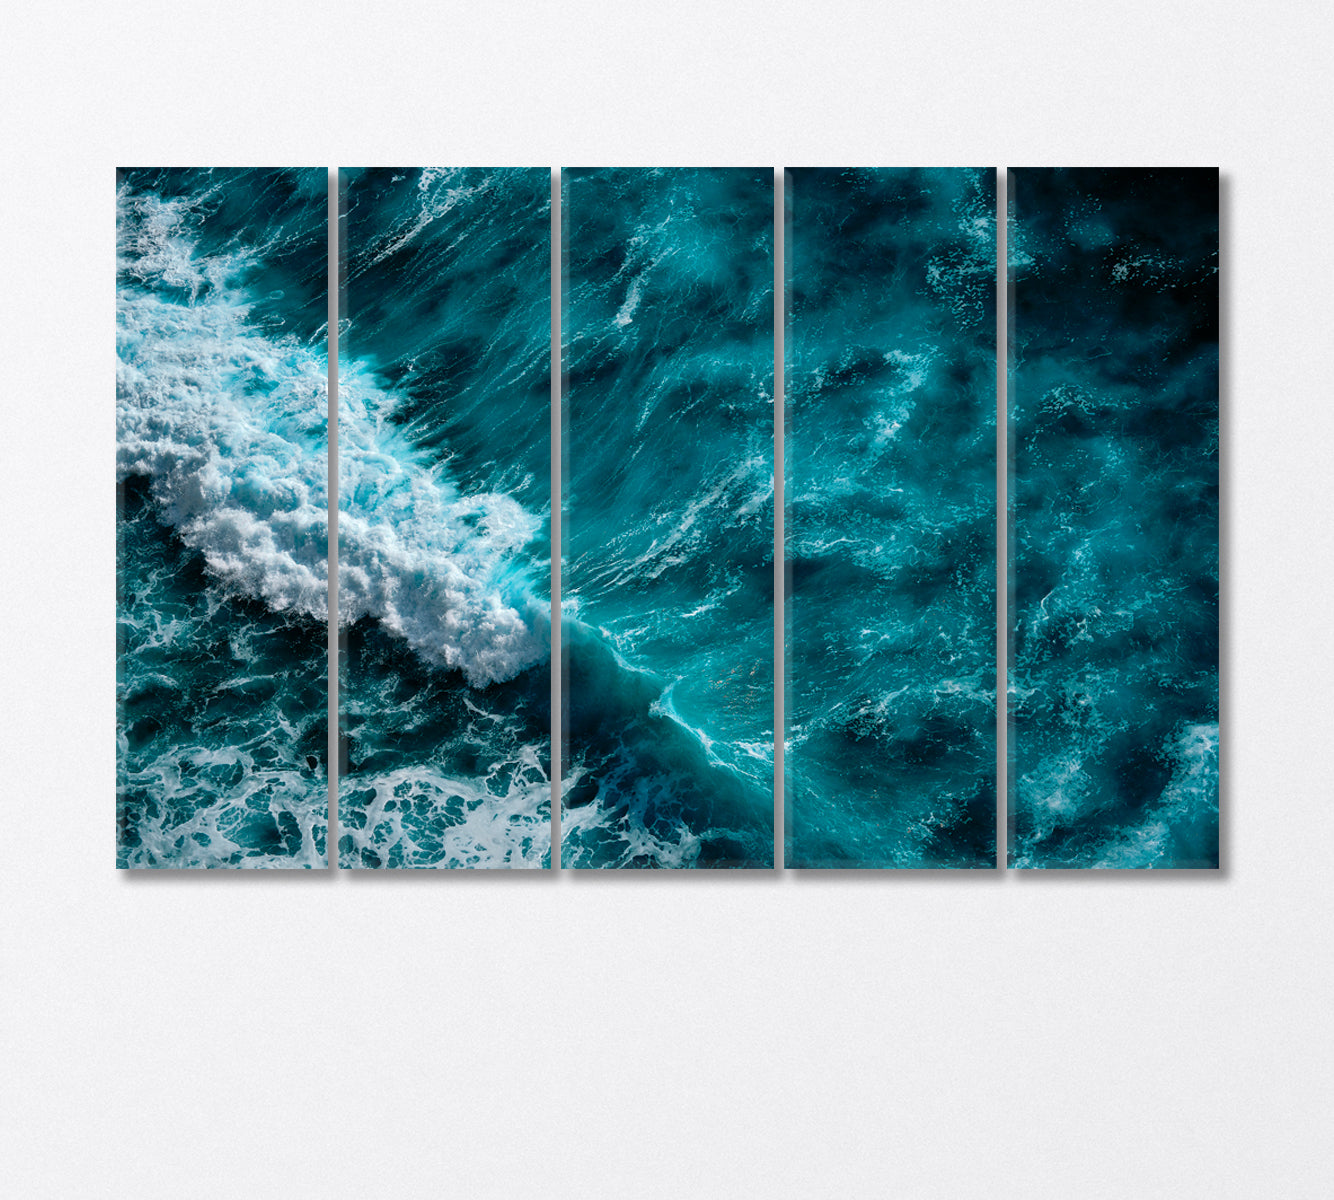 Seething Foamy Ocean Waves Canvas Print-Canvas Print-CetArt-5 Panels-36x24 inches-CetArt